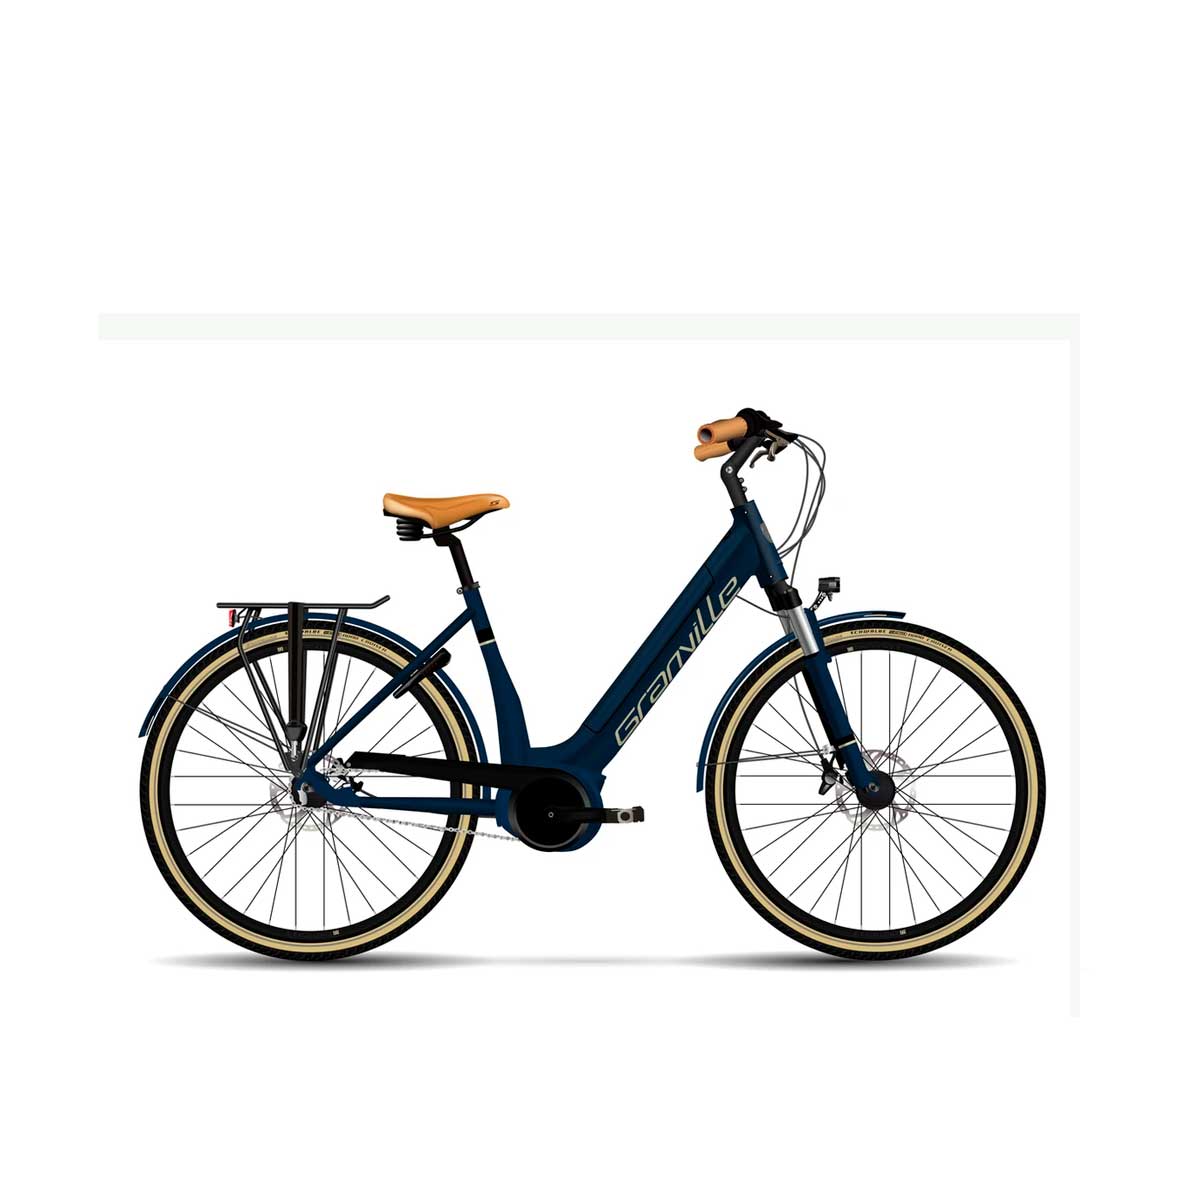 Bicicleta electrica valencia ebike paseo urbana bosch persona mayor senior